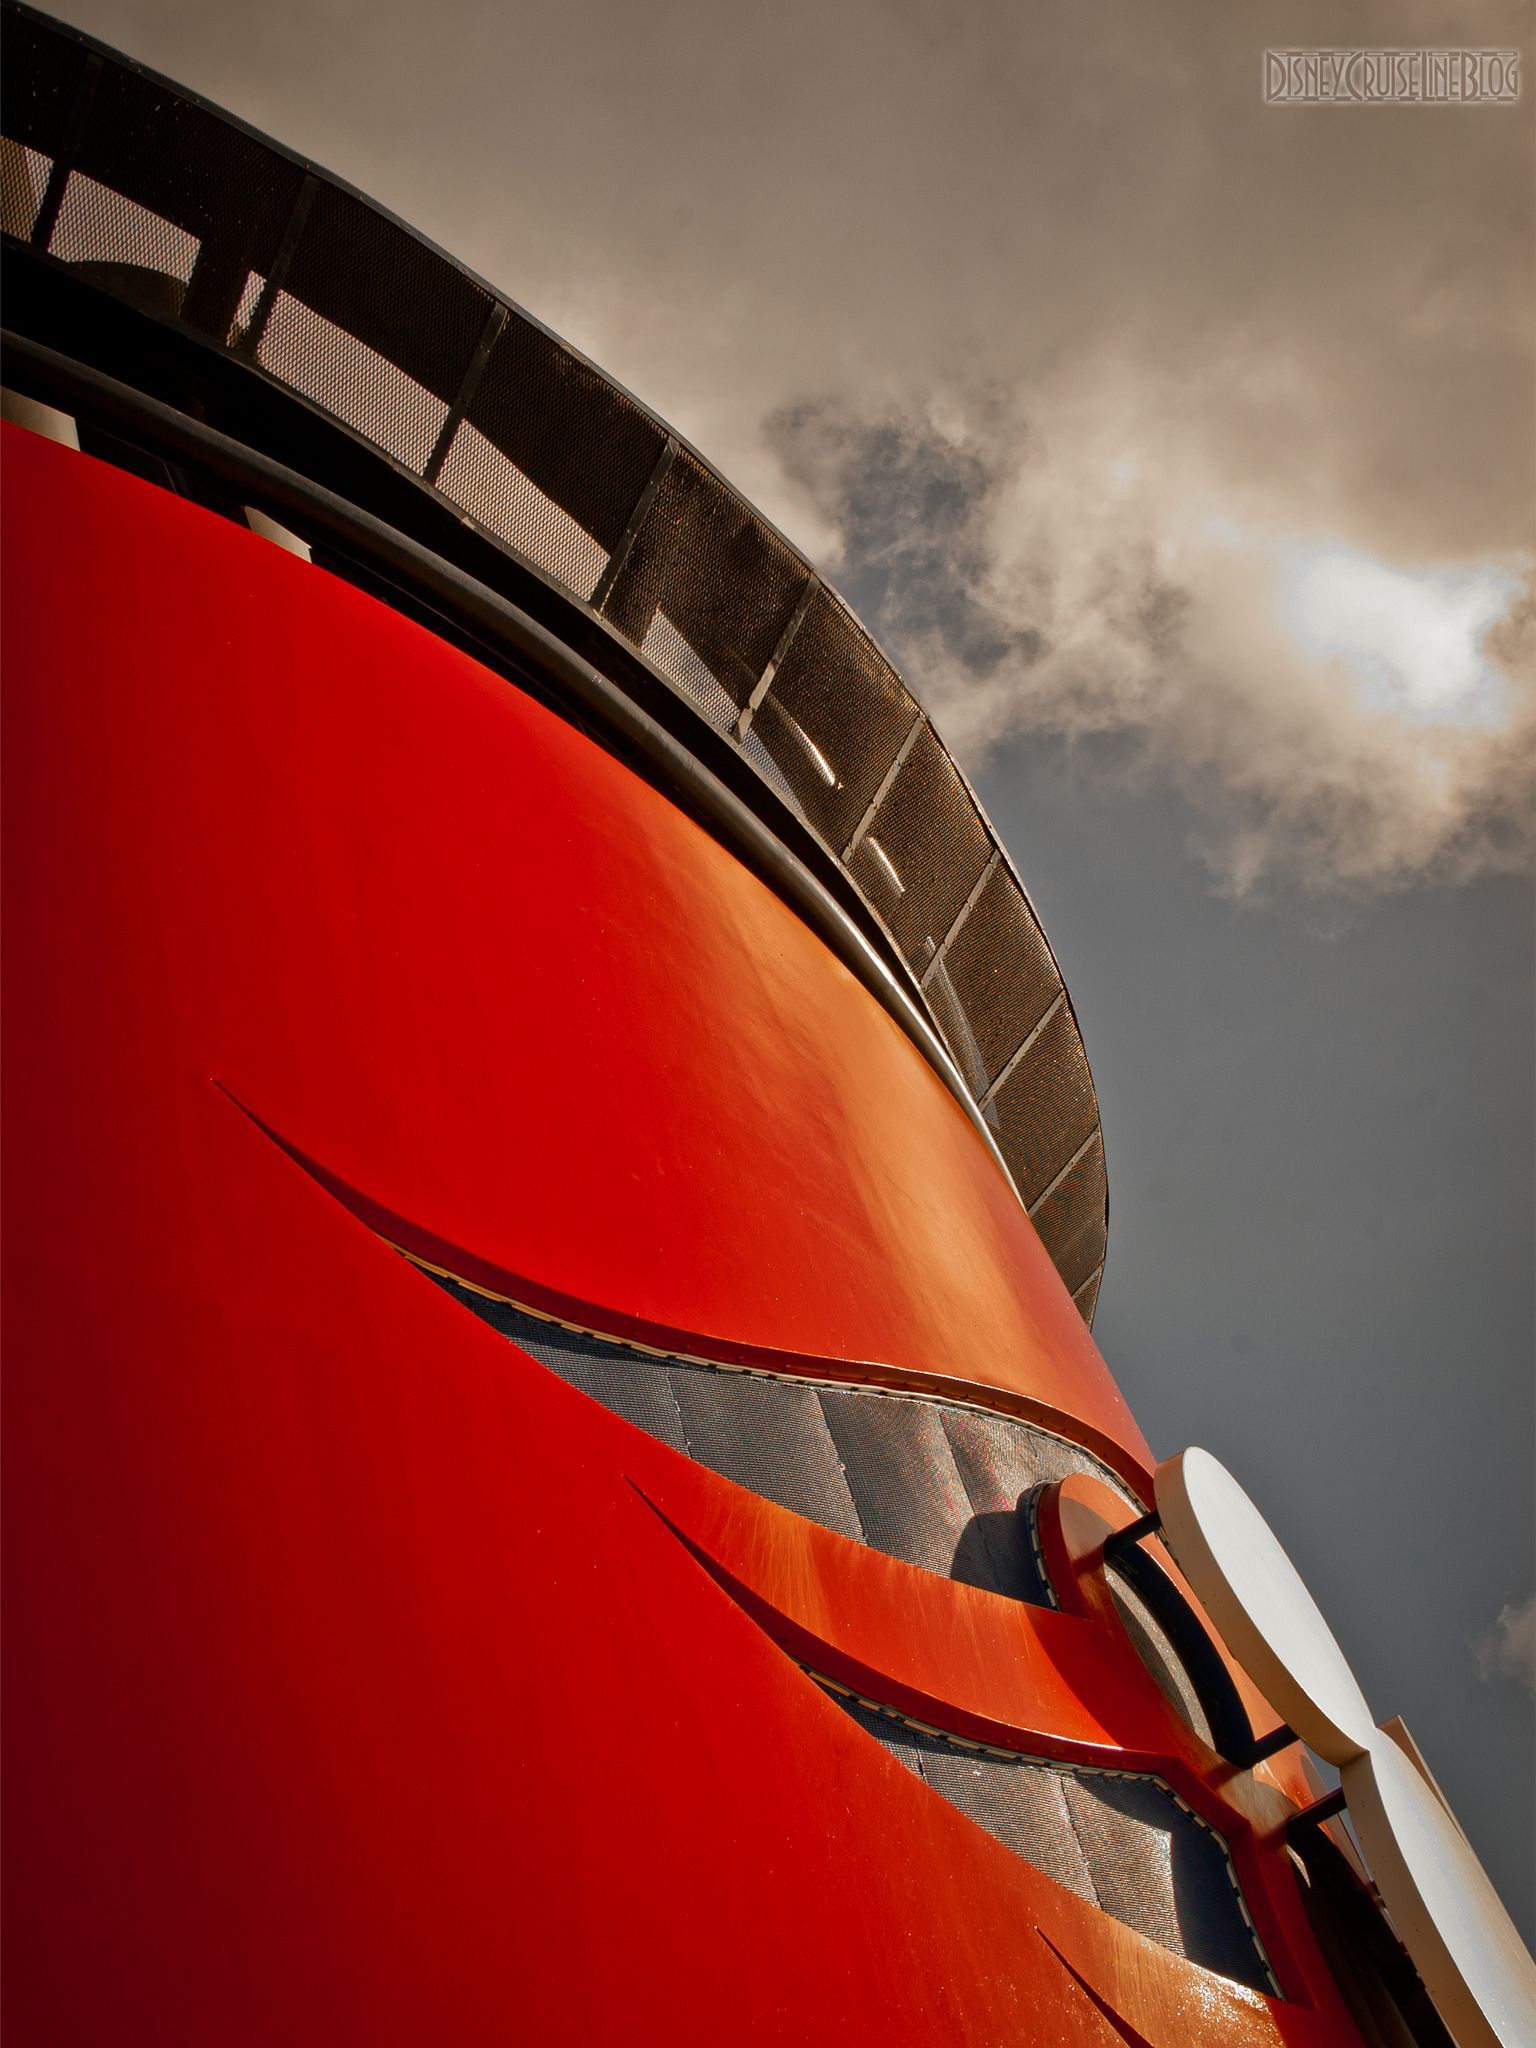 Disney Cruise Inspired Wallpaper • The Disney Cruise Line Blog. Disney cruise, Disney cruise line, Cruise